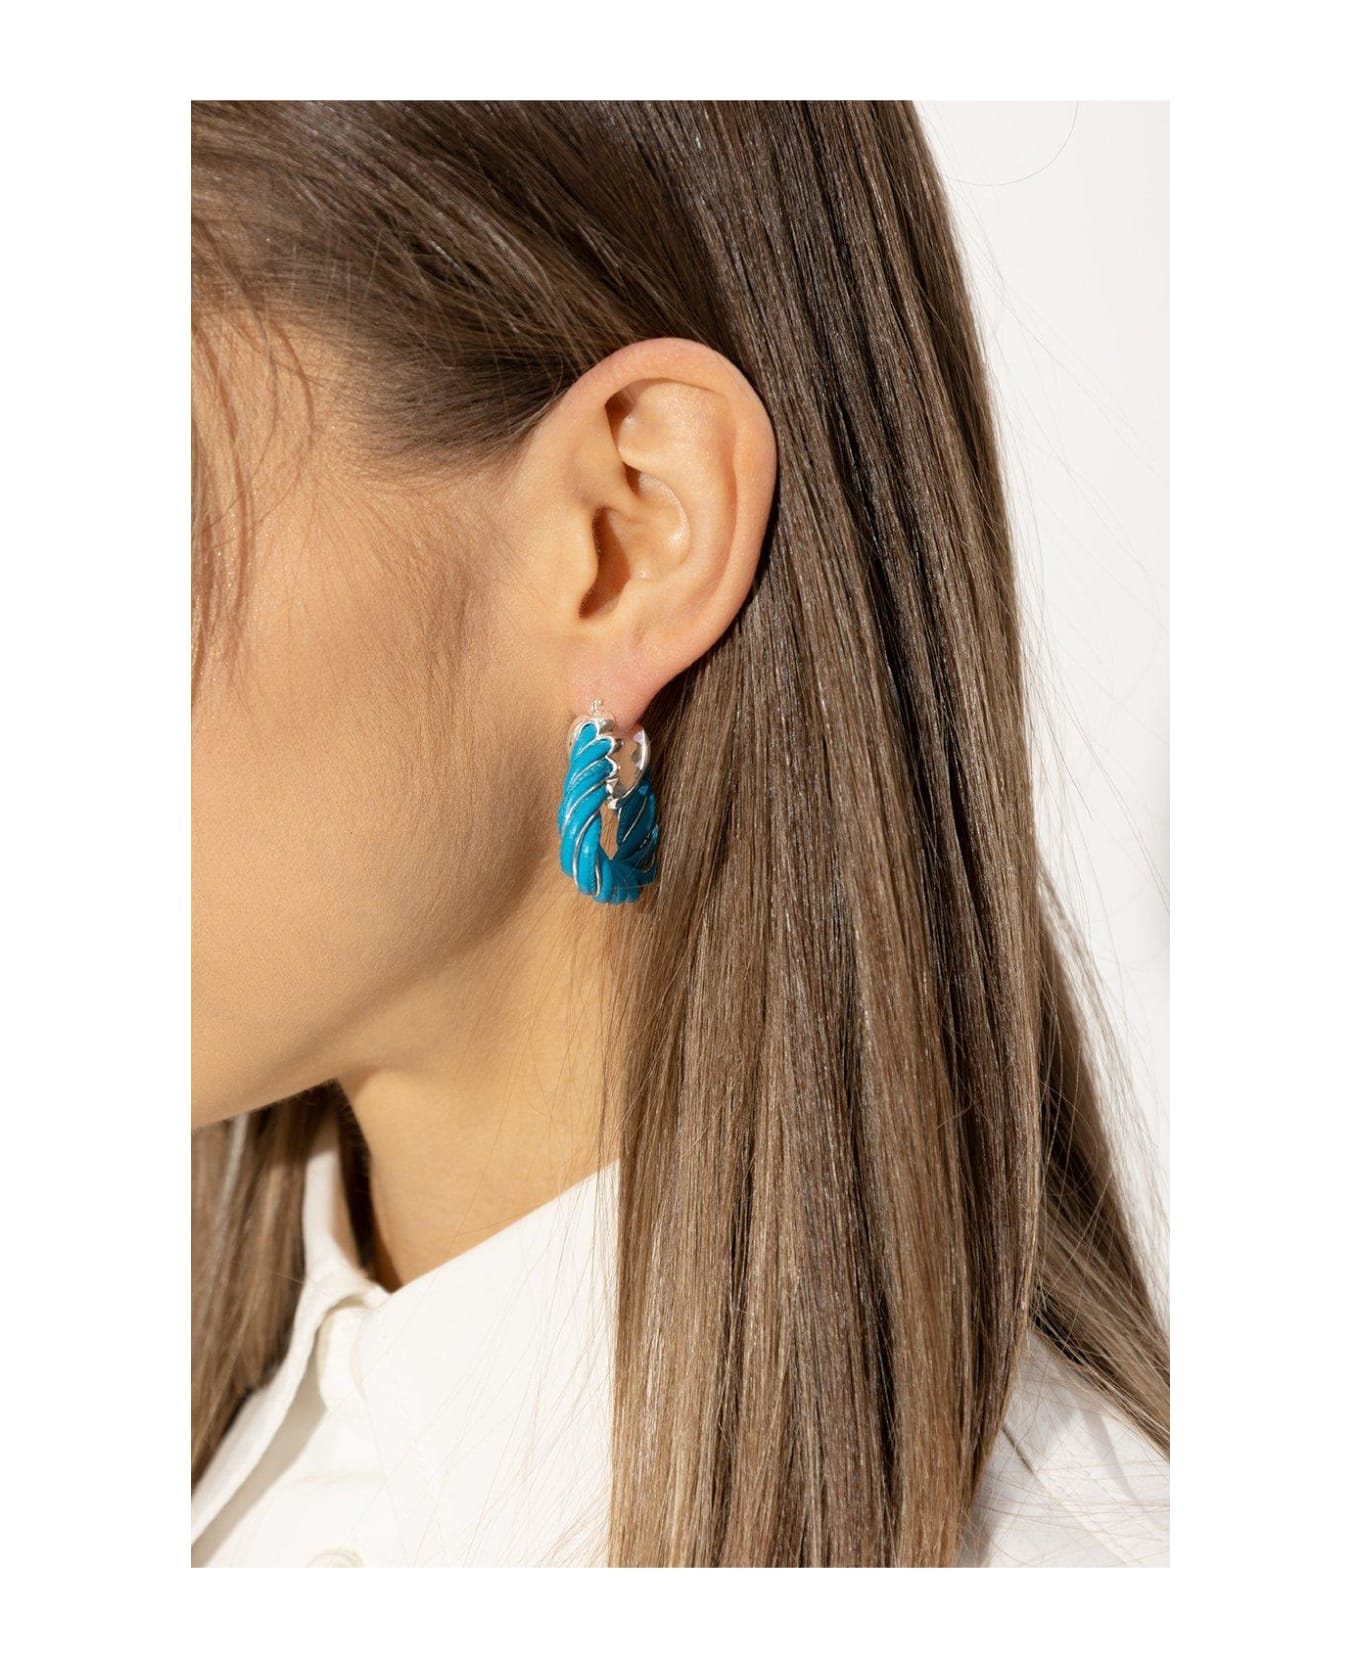 Bottega Veneta Triangular Earrings - Clear Blue